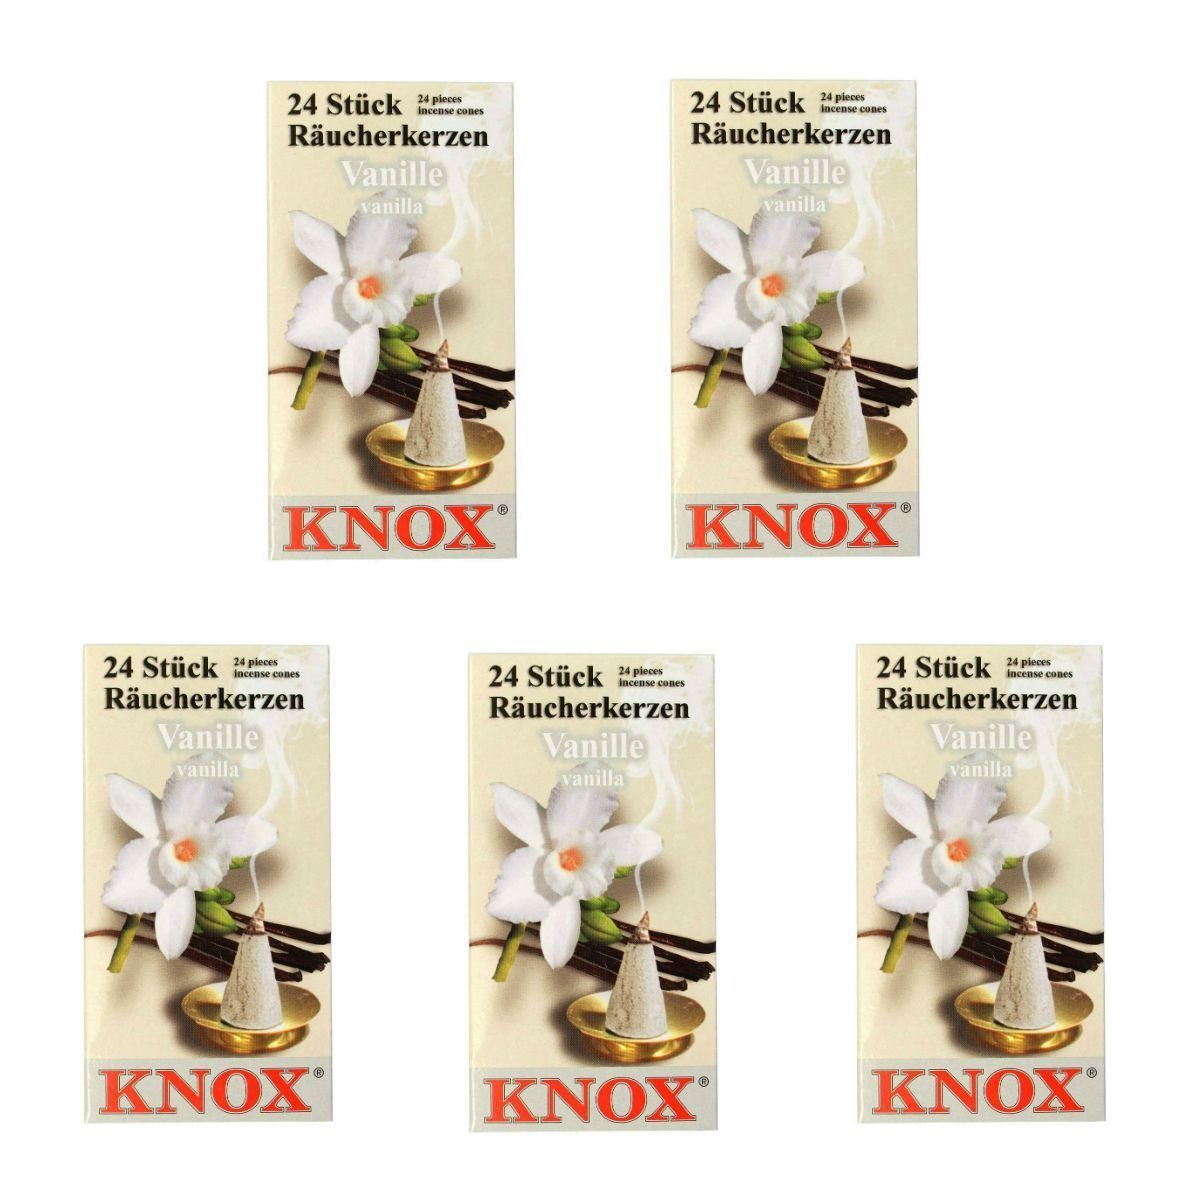 Räuchermännchen - 24er KNOX Räucherkerzen- Vanille Päckchen 5 Packung